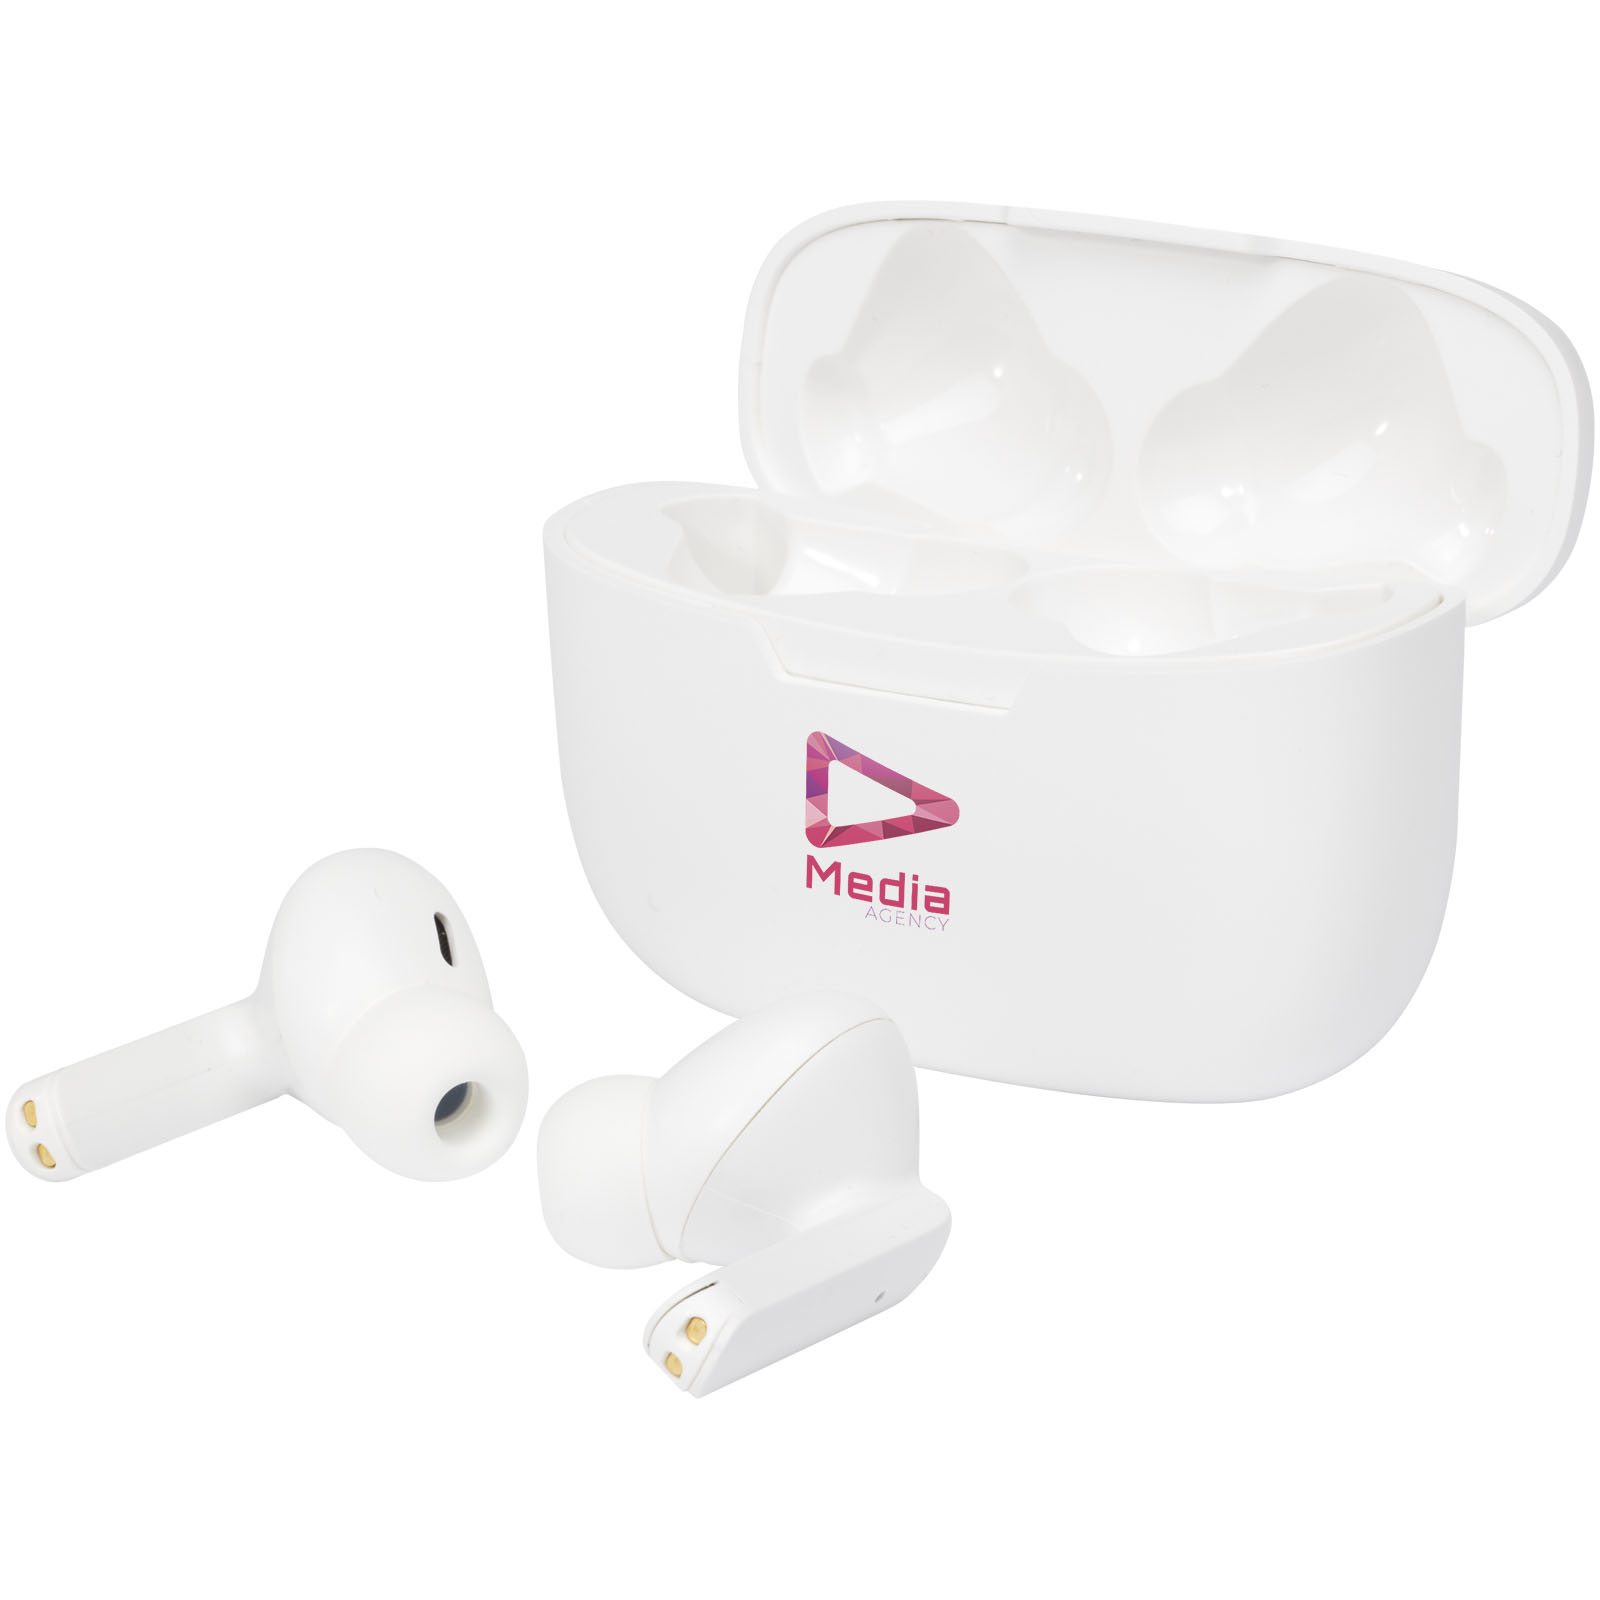 Essos 2.0 True Wireless auto pair earbuds with case